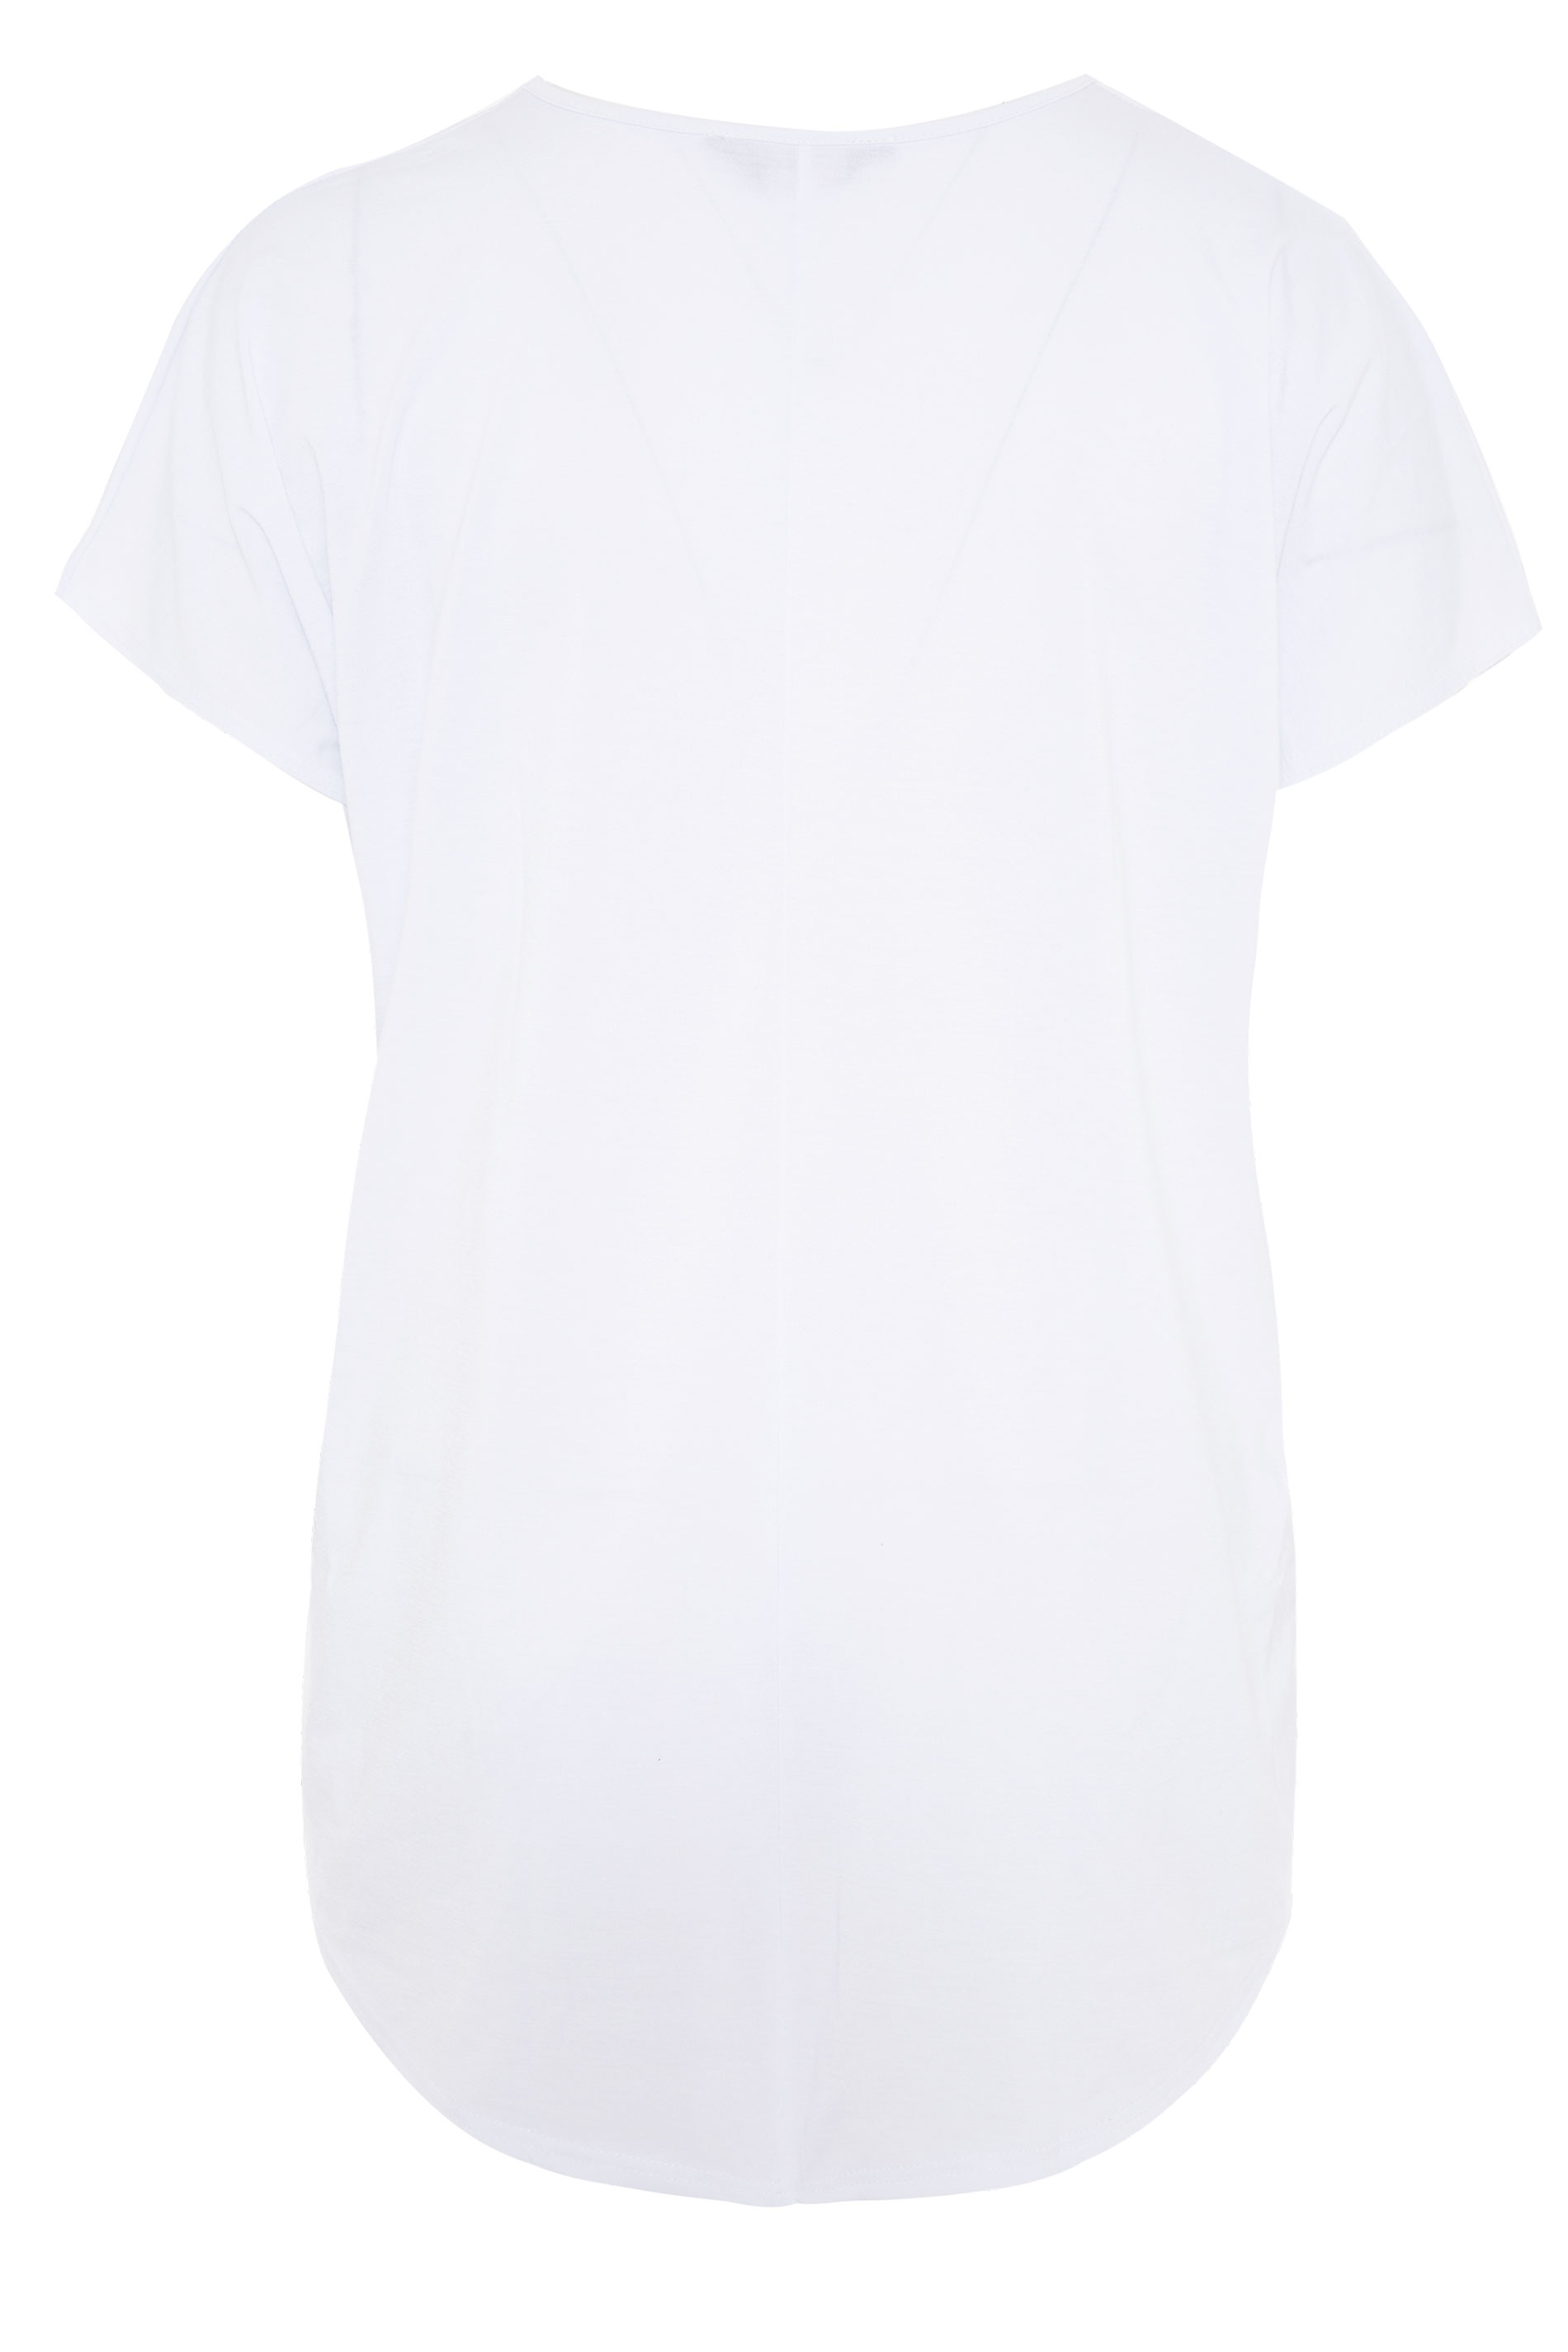 Grande taille  Tops Grande taille  Tops Casual | T-Shirt Blanc Imprimé Block Animal - FZ89164